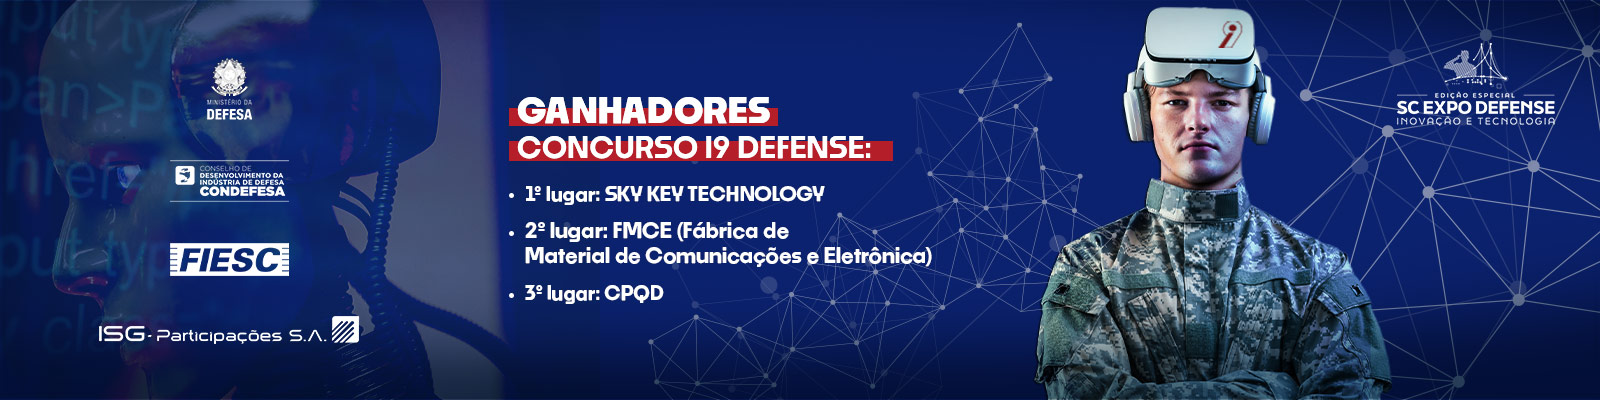 Ganhadores do concurso i9 Defense: primeiro lugar Sky Key Technology, segundo lugar FMCE, terceiro lugar CPQD.